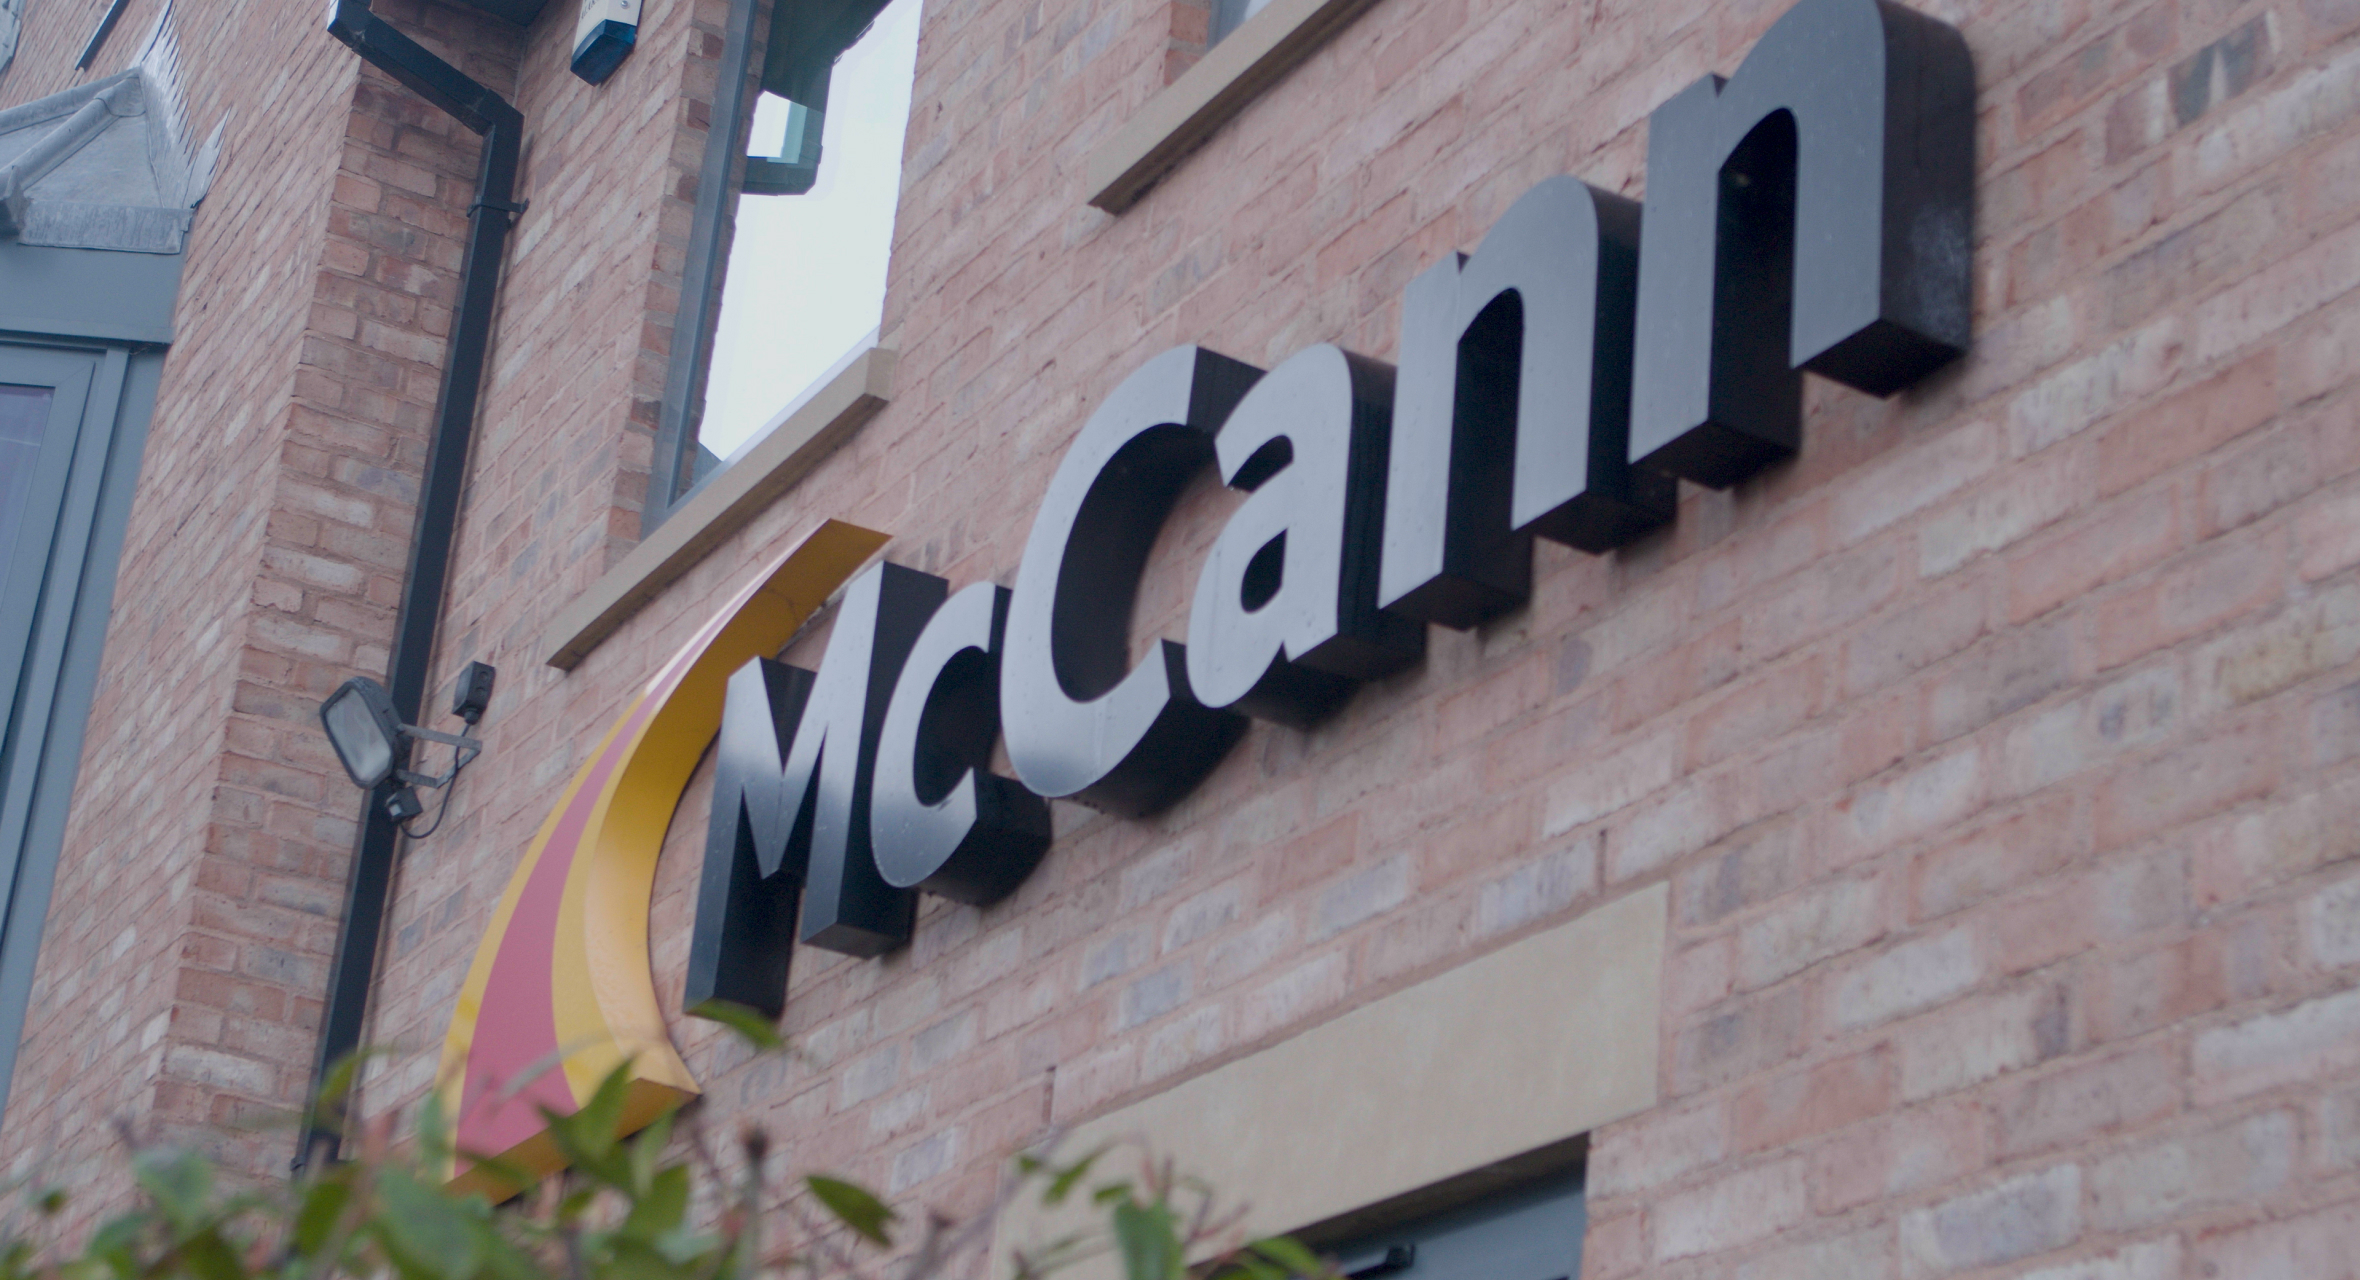 McCann Ltd. office building with black logo on wall